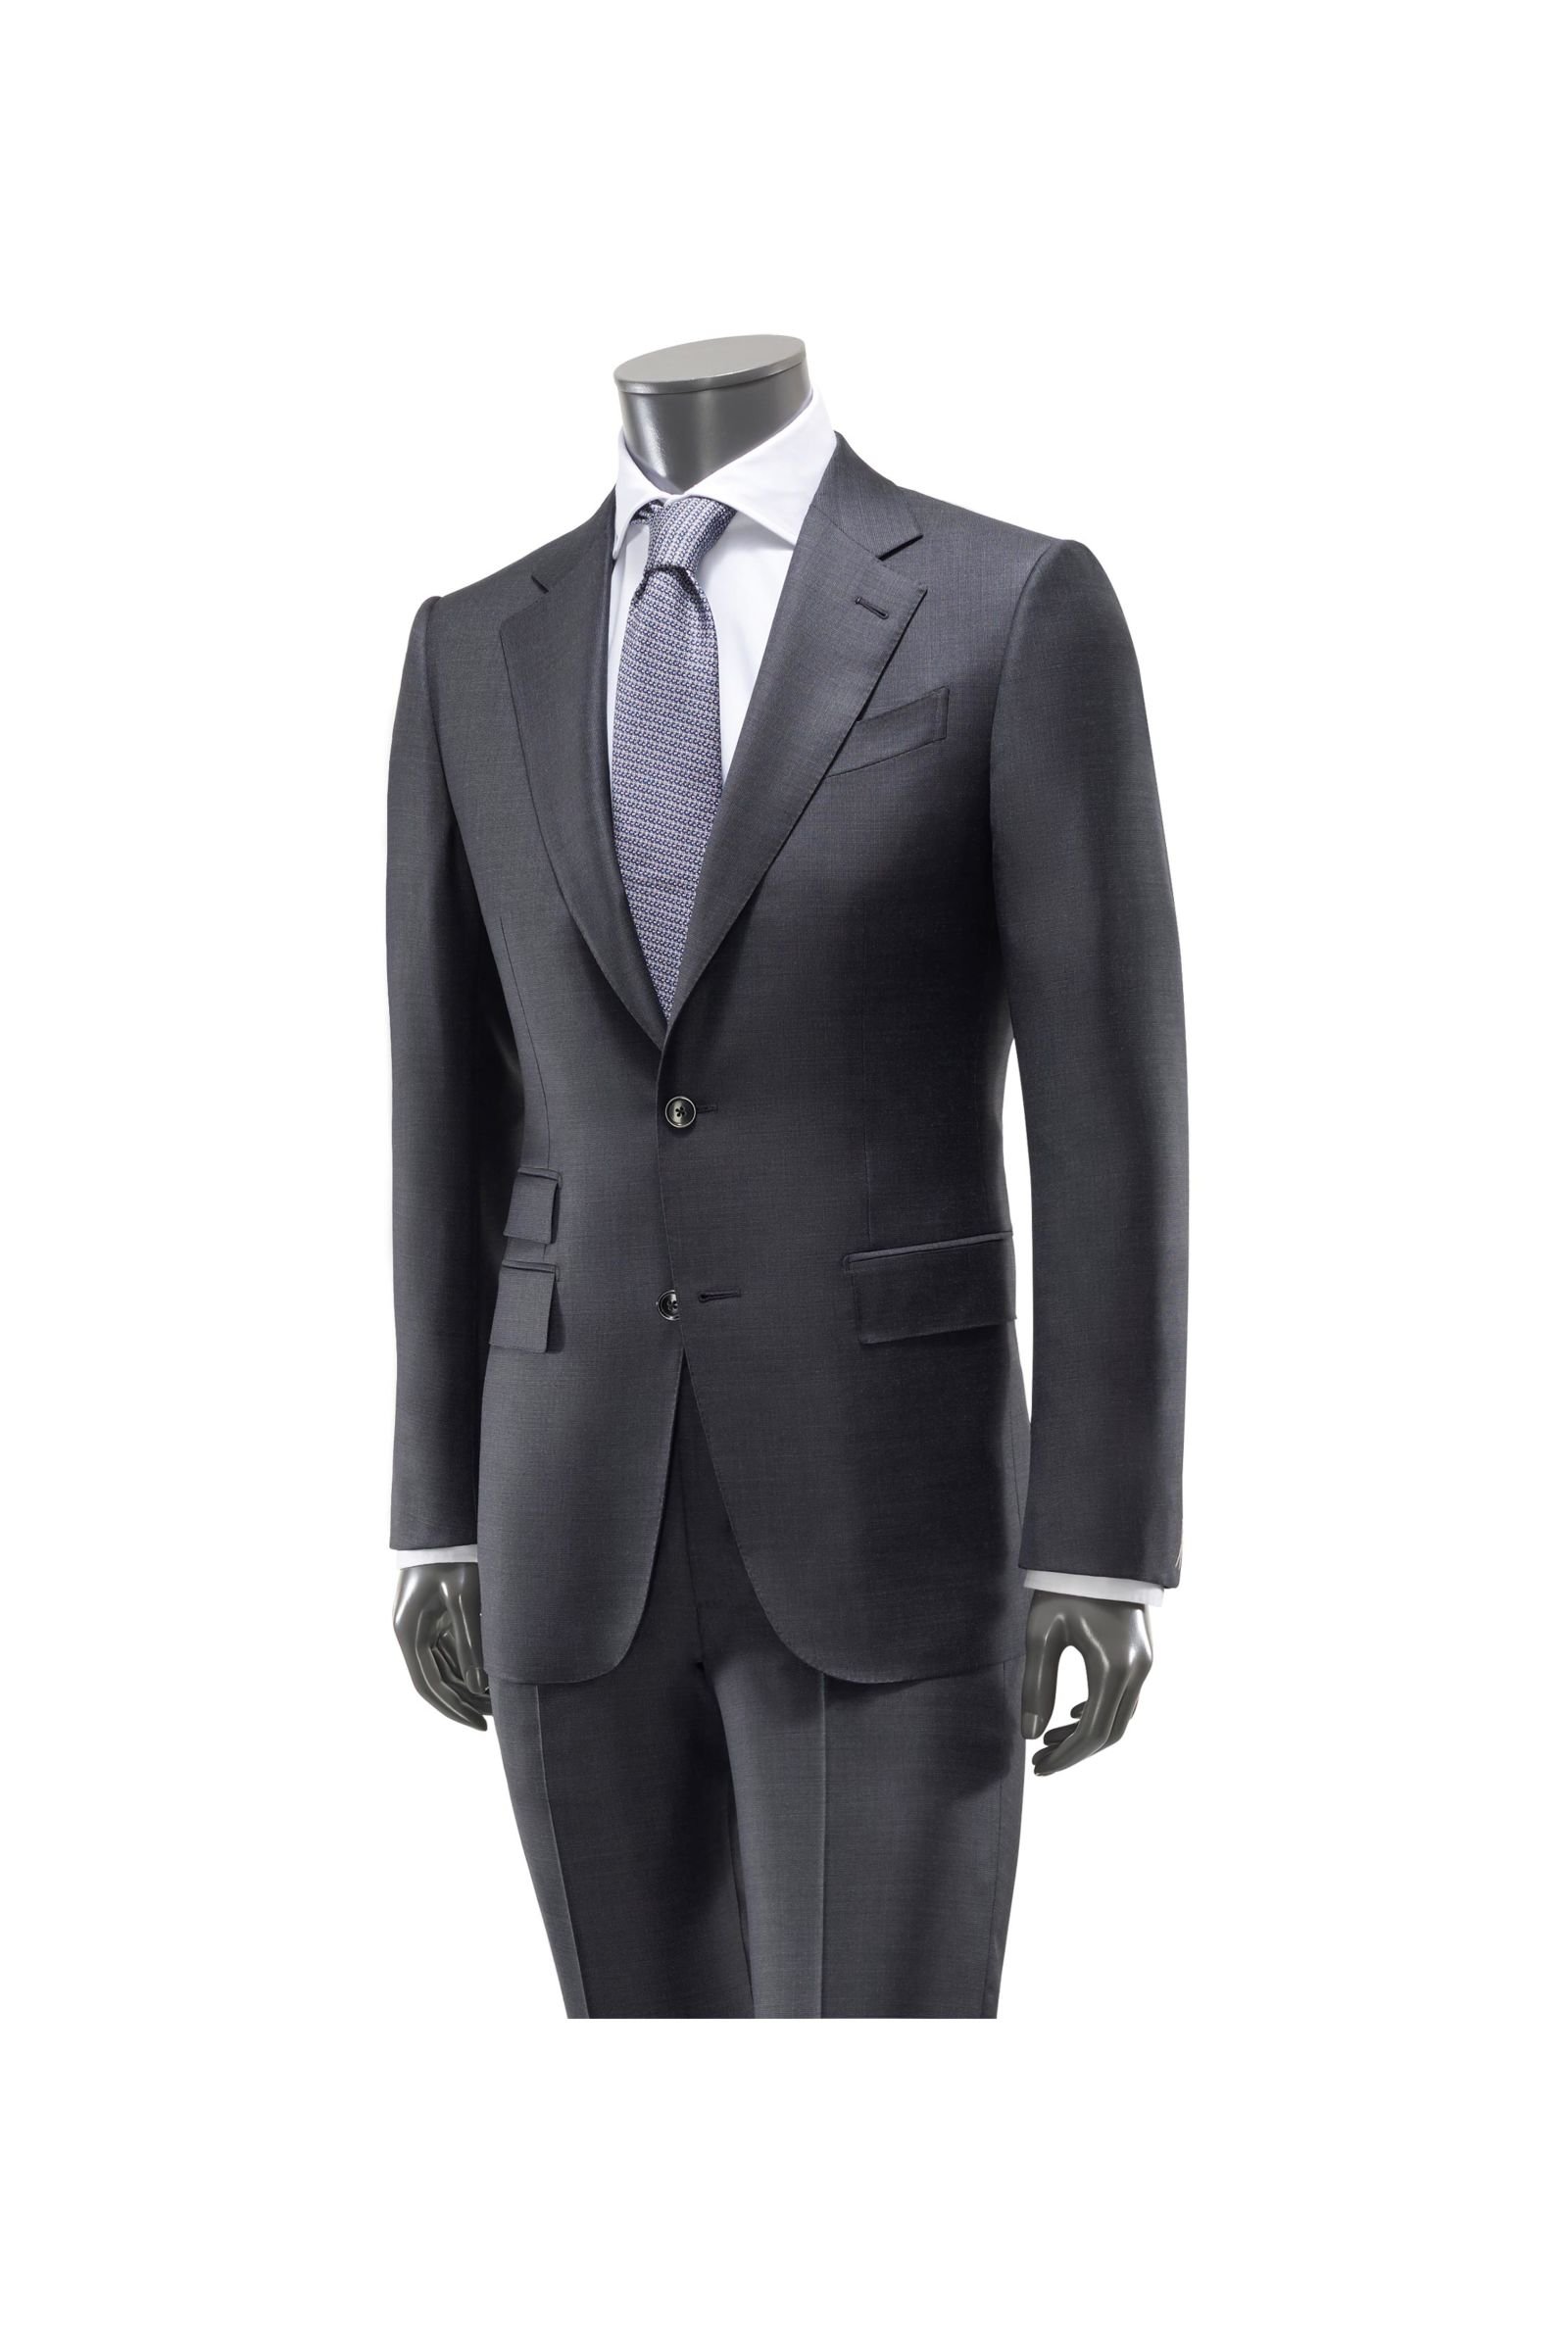 Suit 'Trofeo Manhattan Slim Fit' dark grey patterned